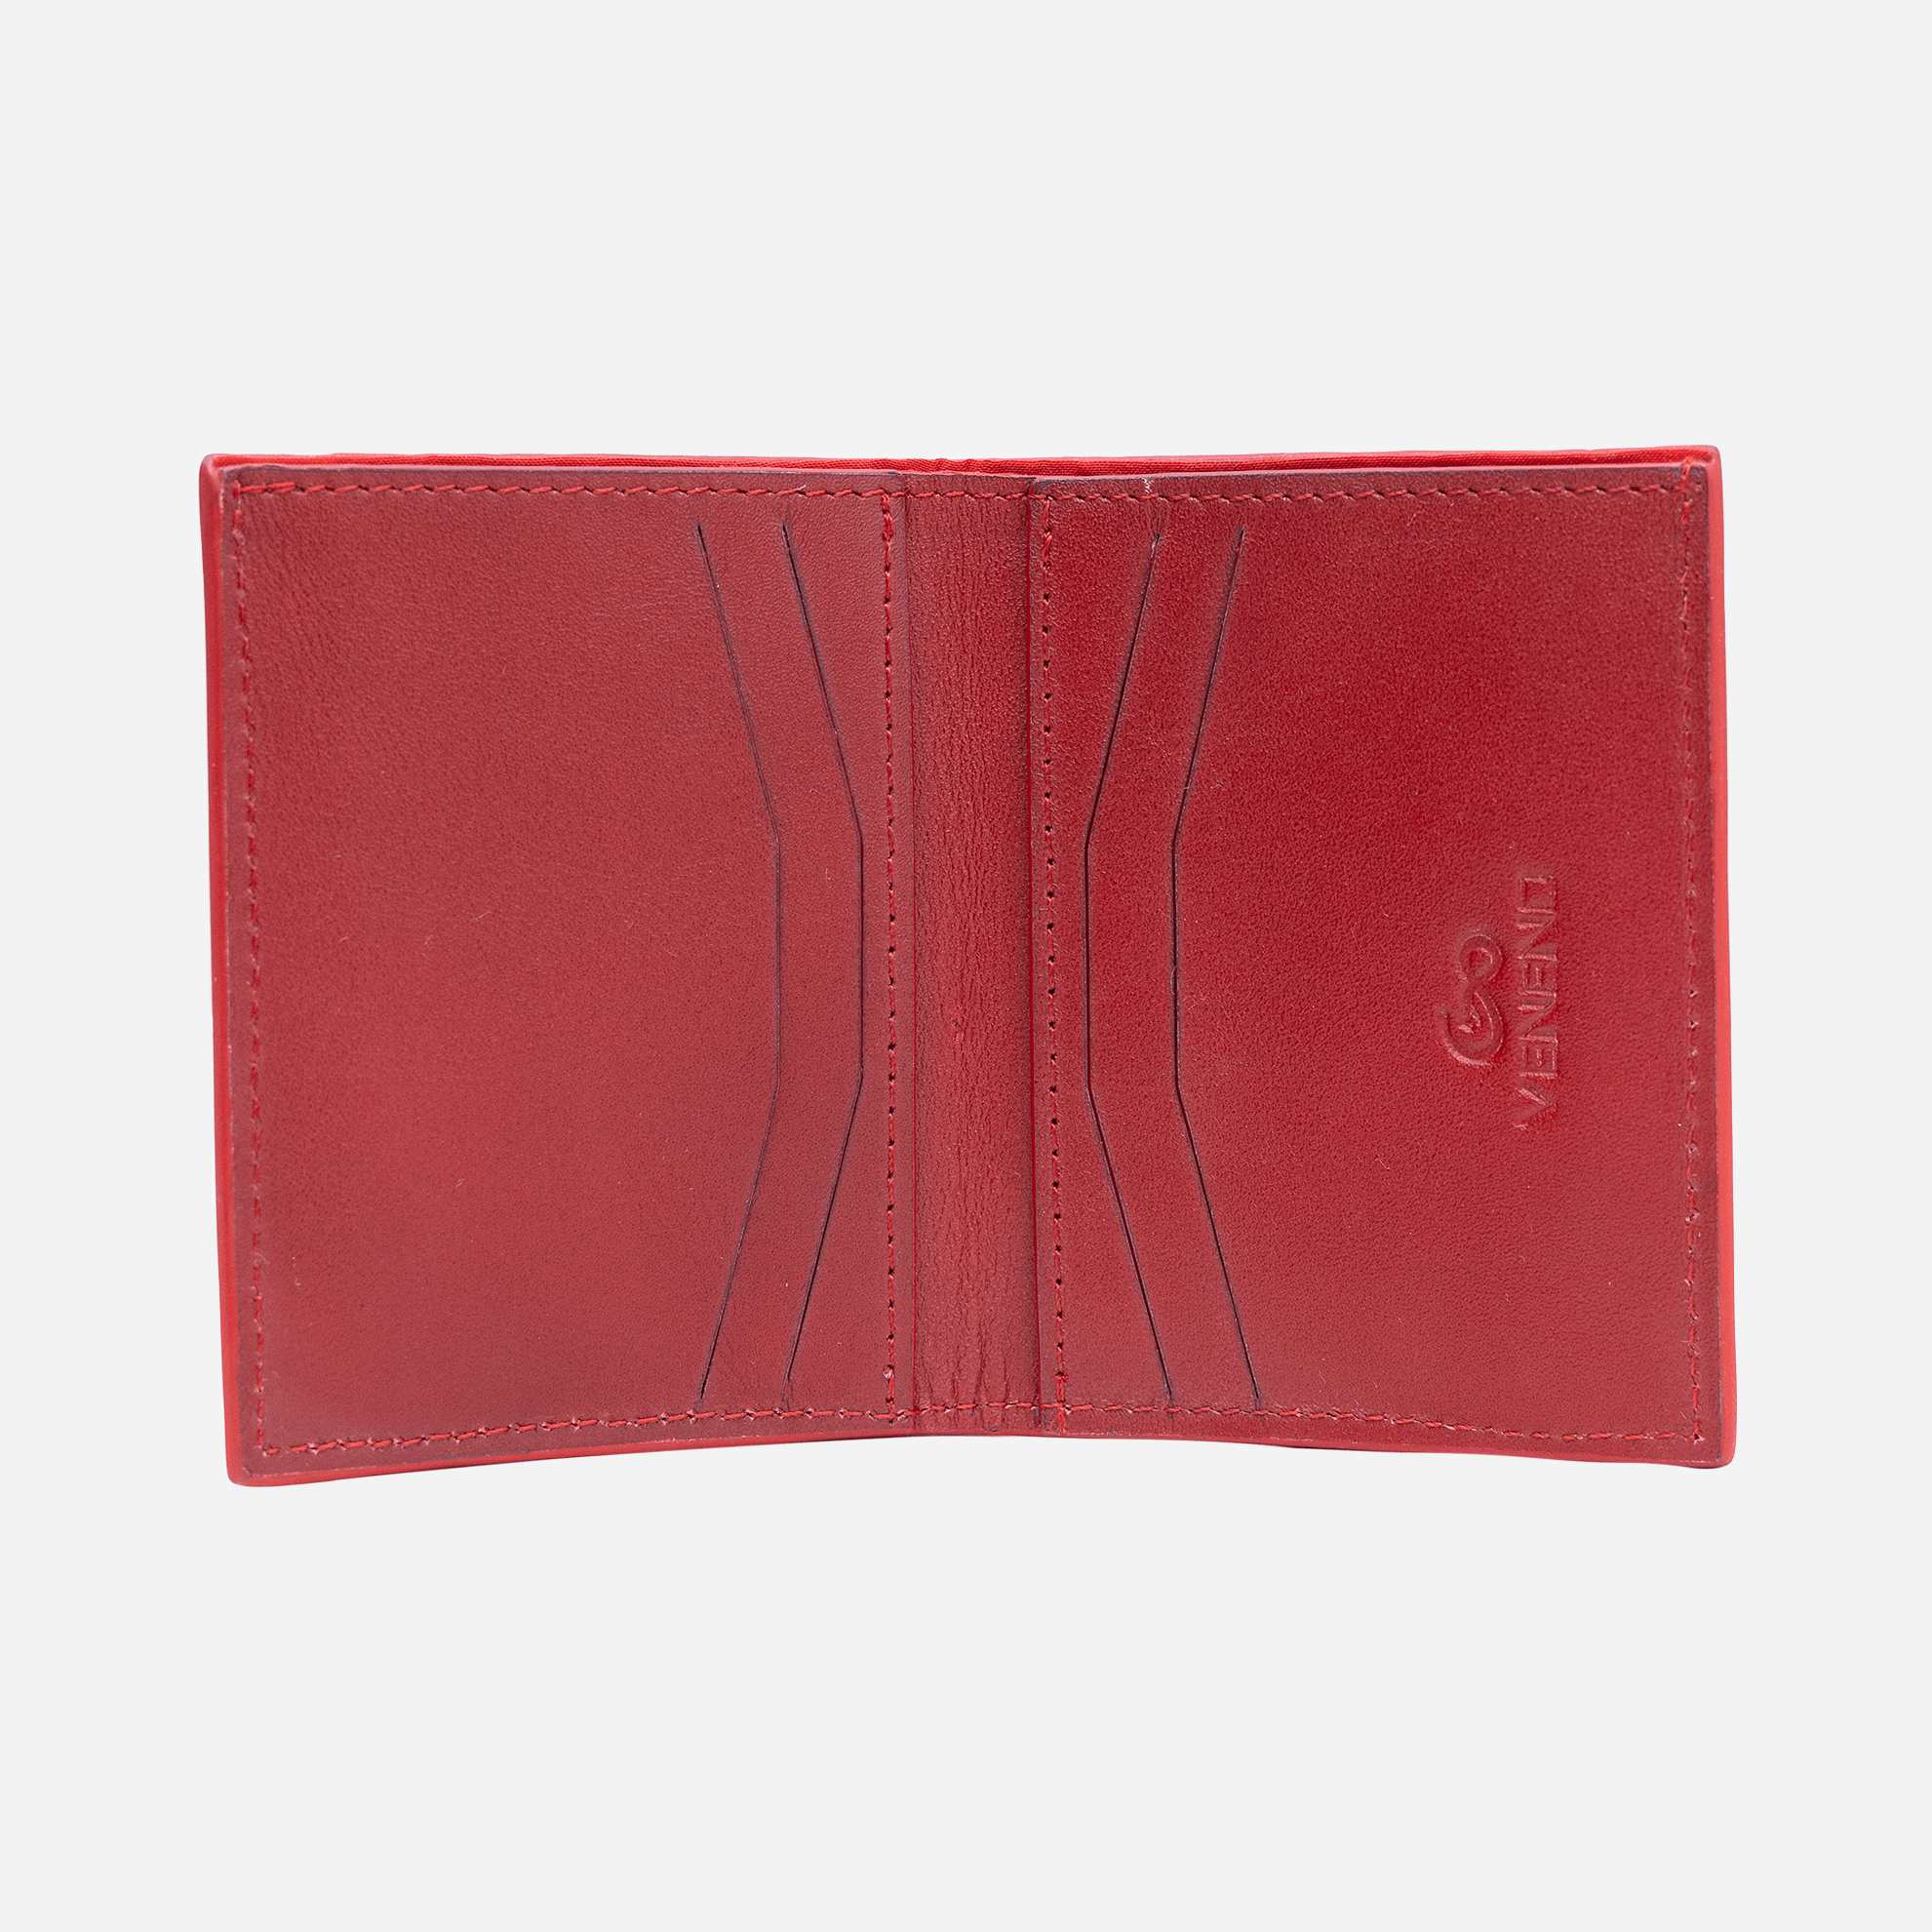 Veneno Leather Goods Cartera Compacta "The TIE" Red Velvet